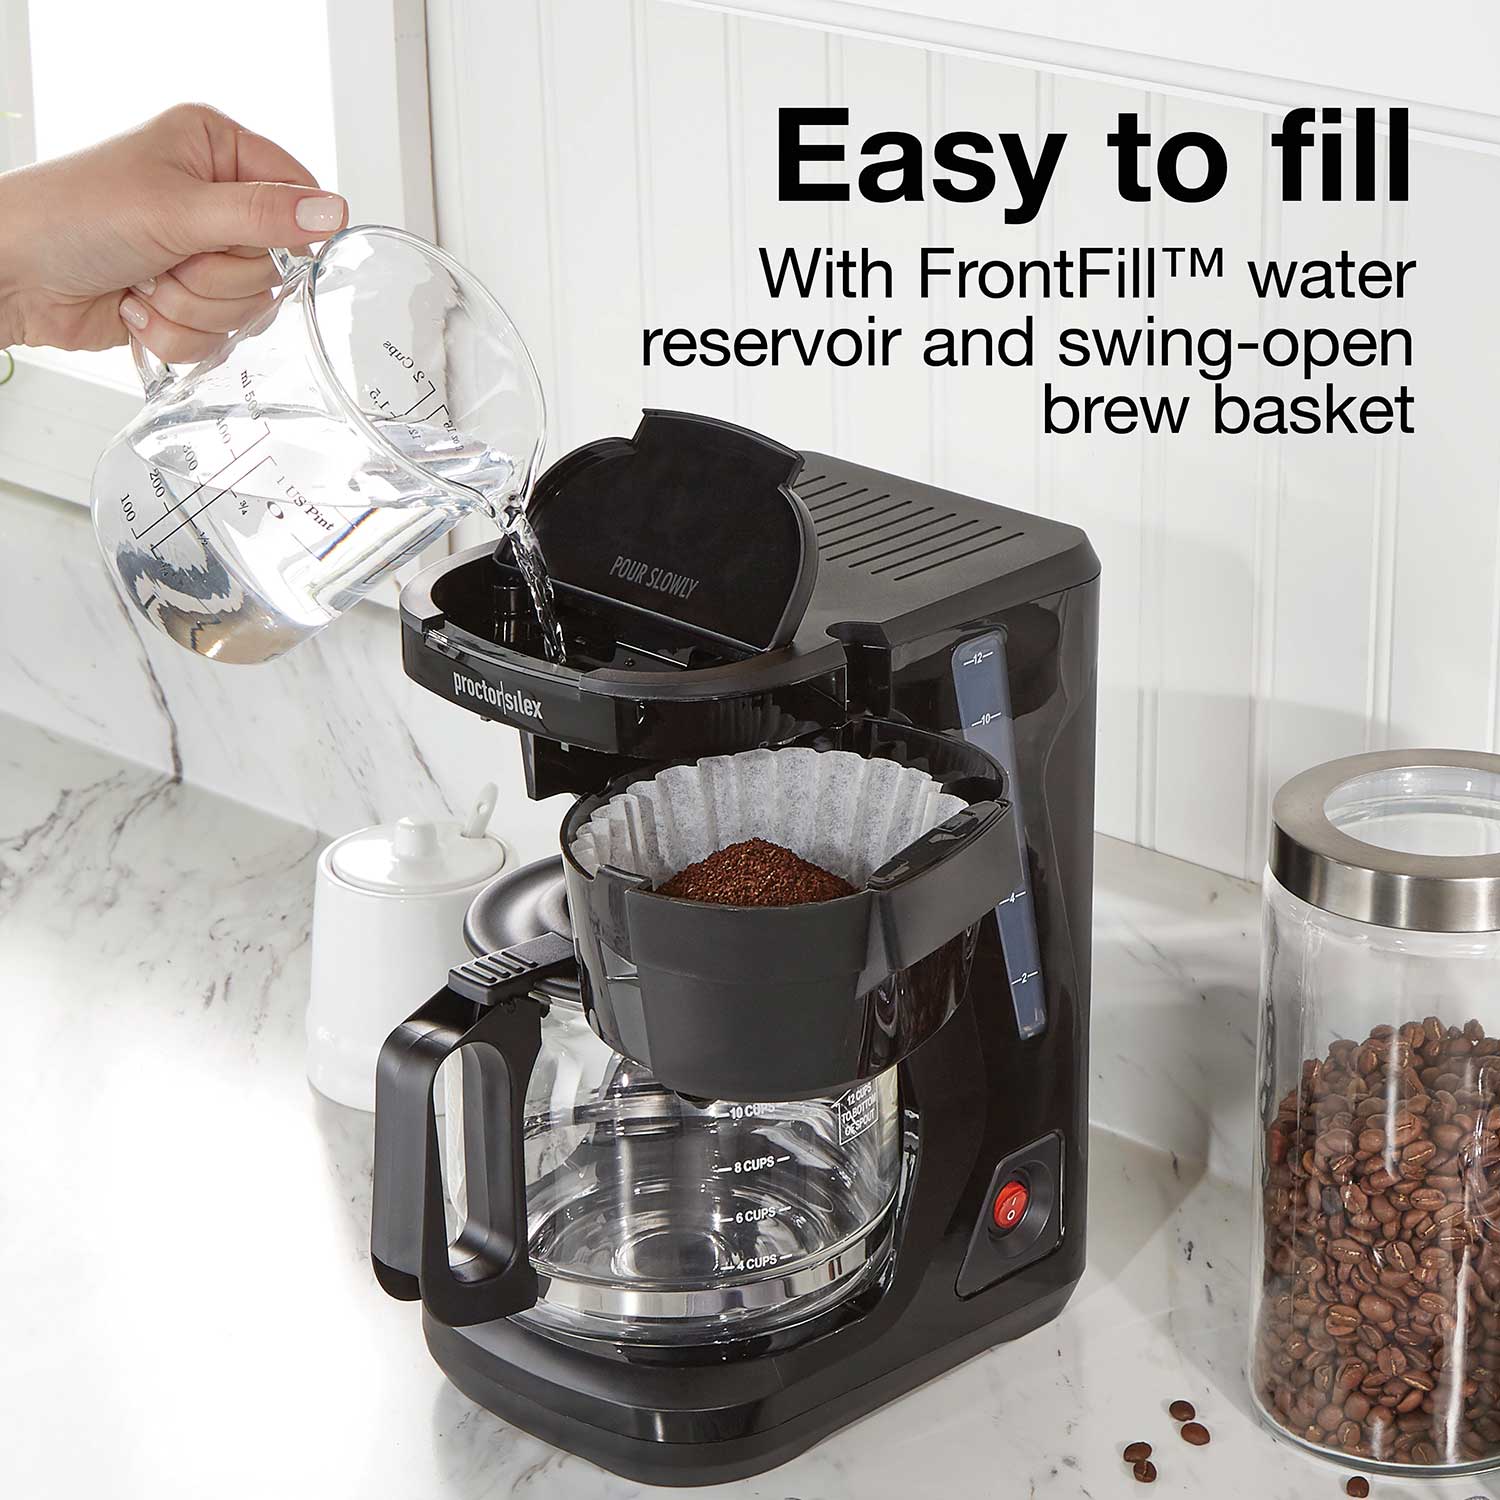  Hamilton Beach Programmable FrontFill Coffee Maker